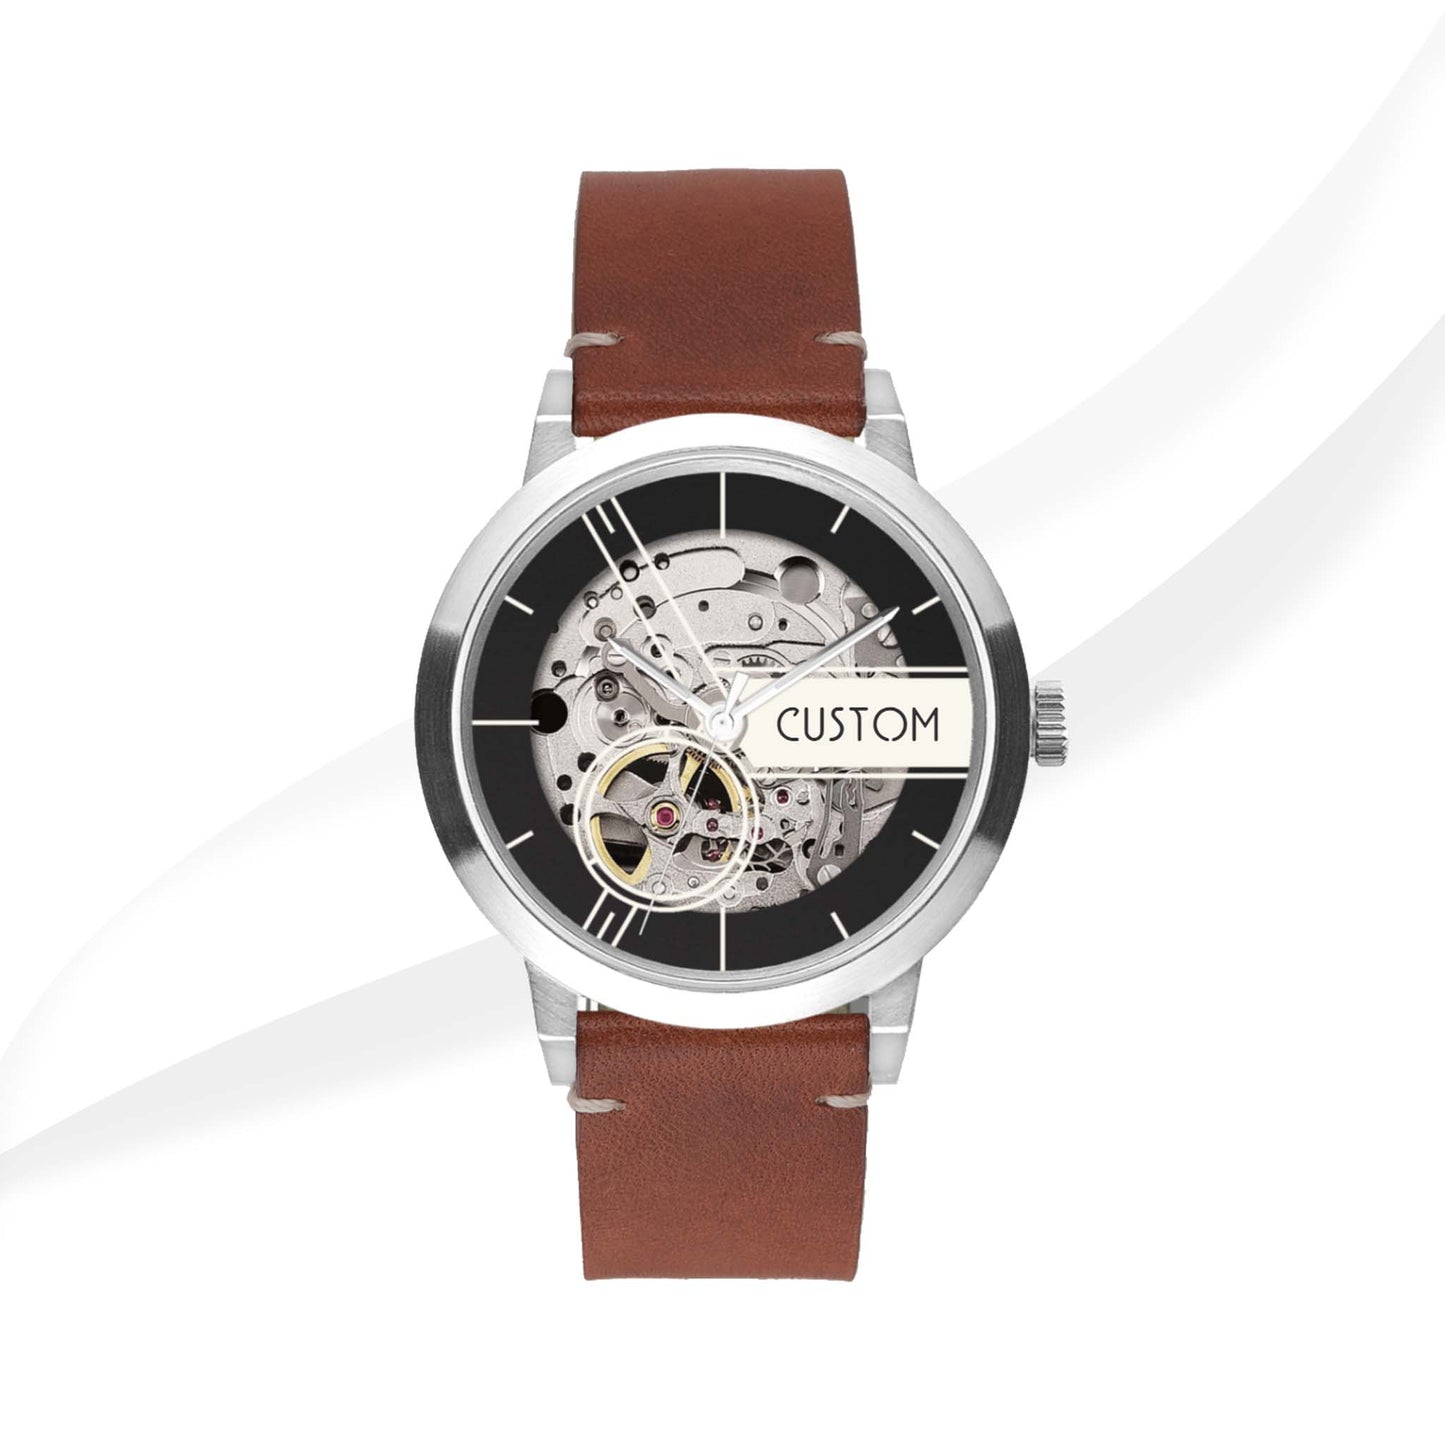 EONIQ custom skeleton watch - brown strap